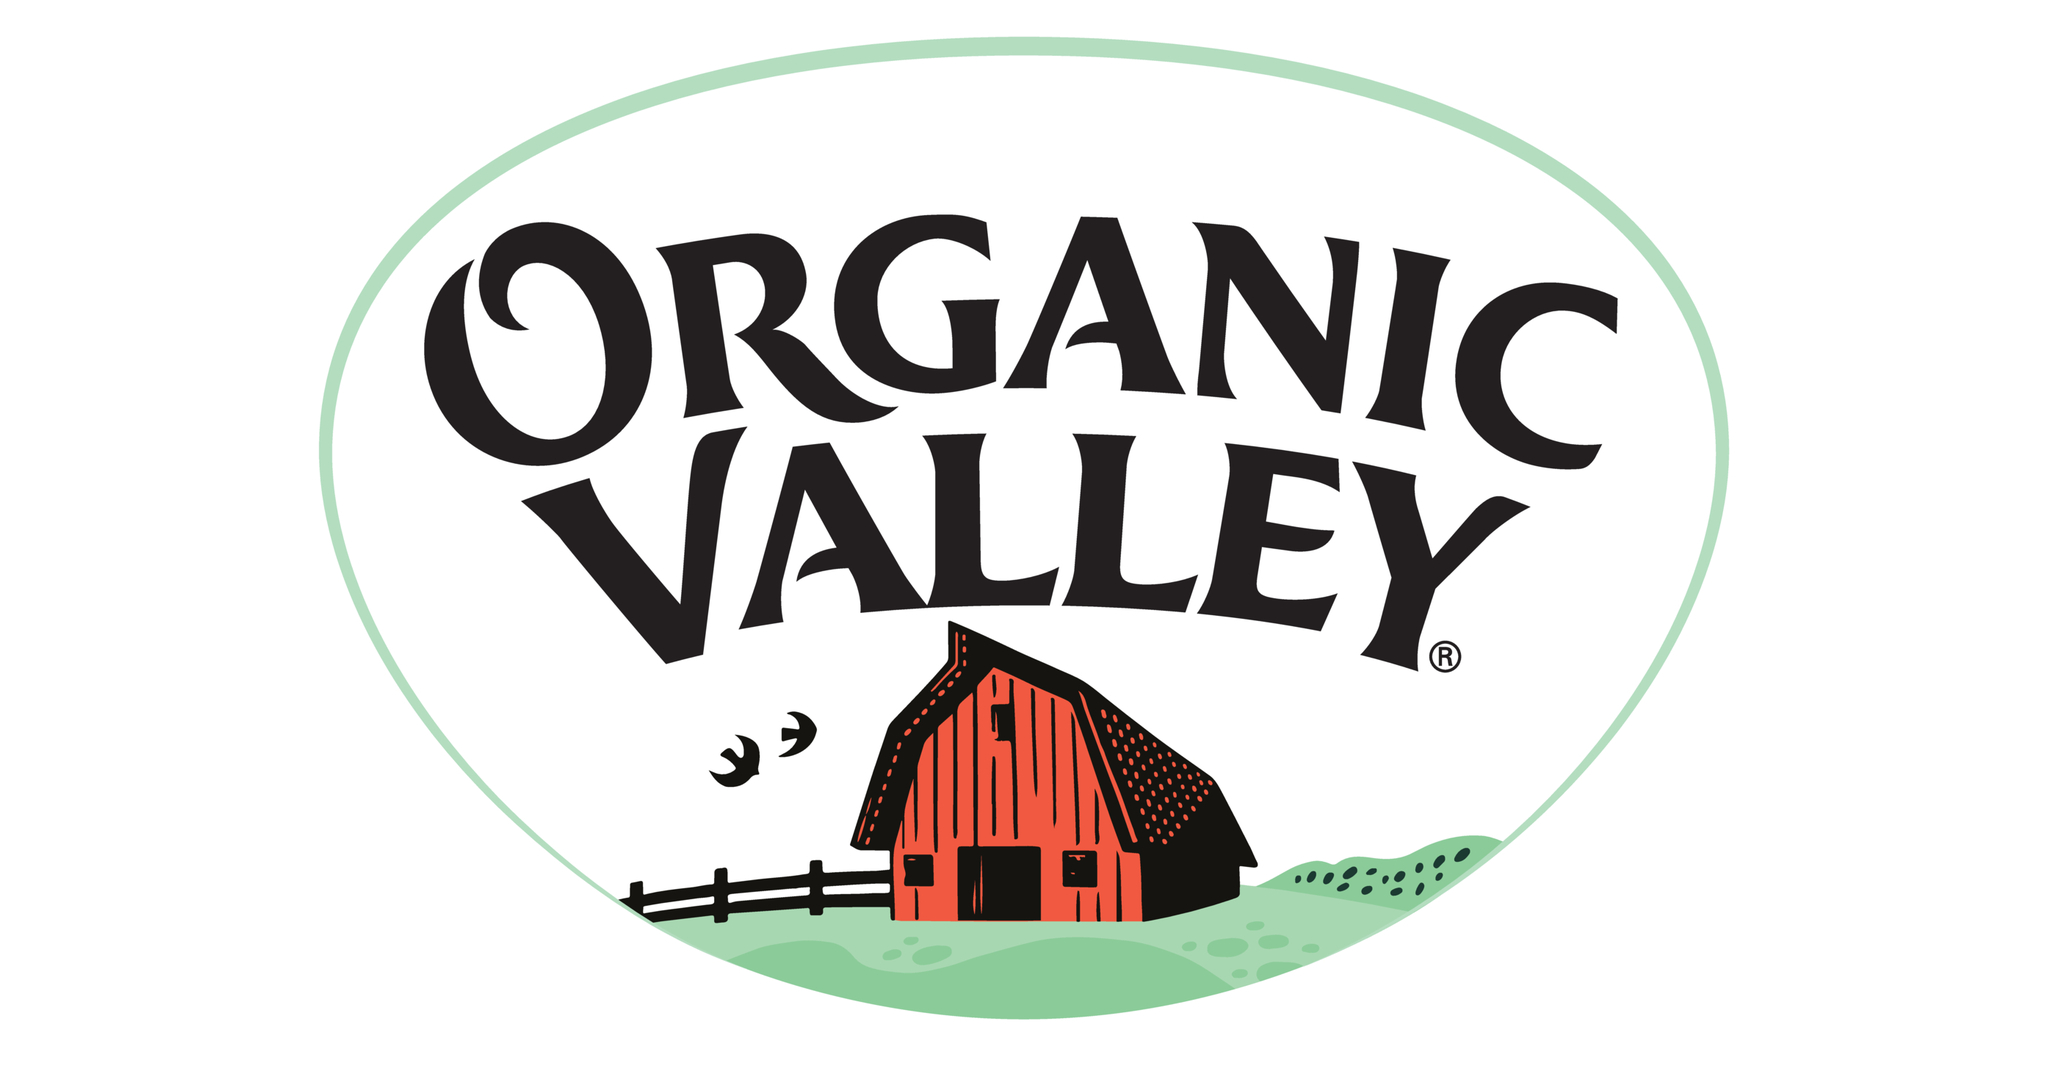 https://mma.prnewswire.com/media/341859/Organic_Valley_New_Logo.jpg?p=facebook